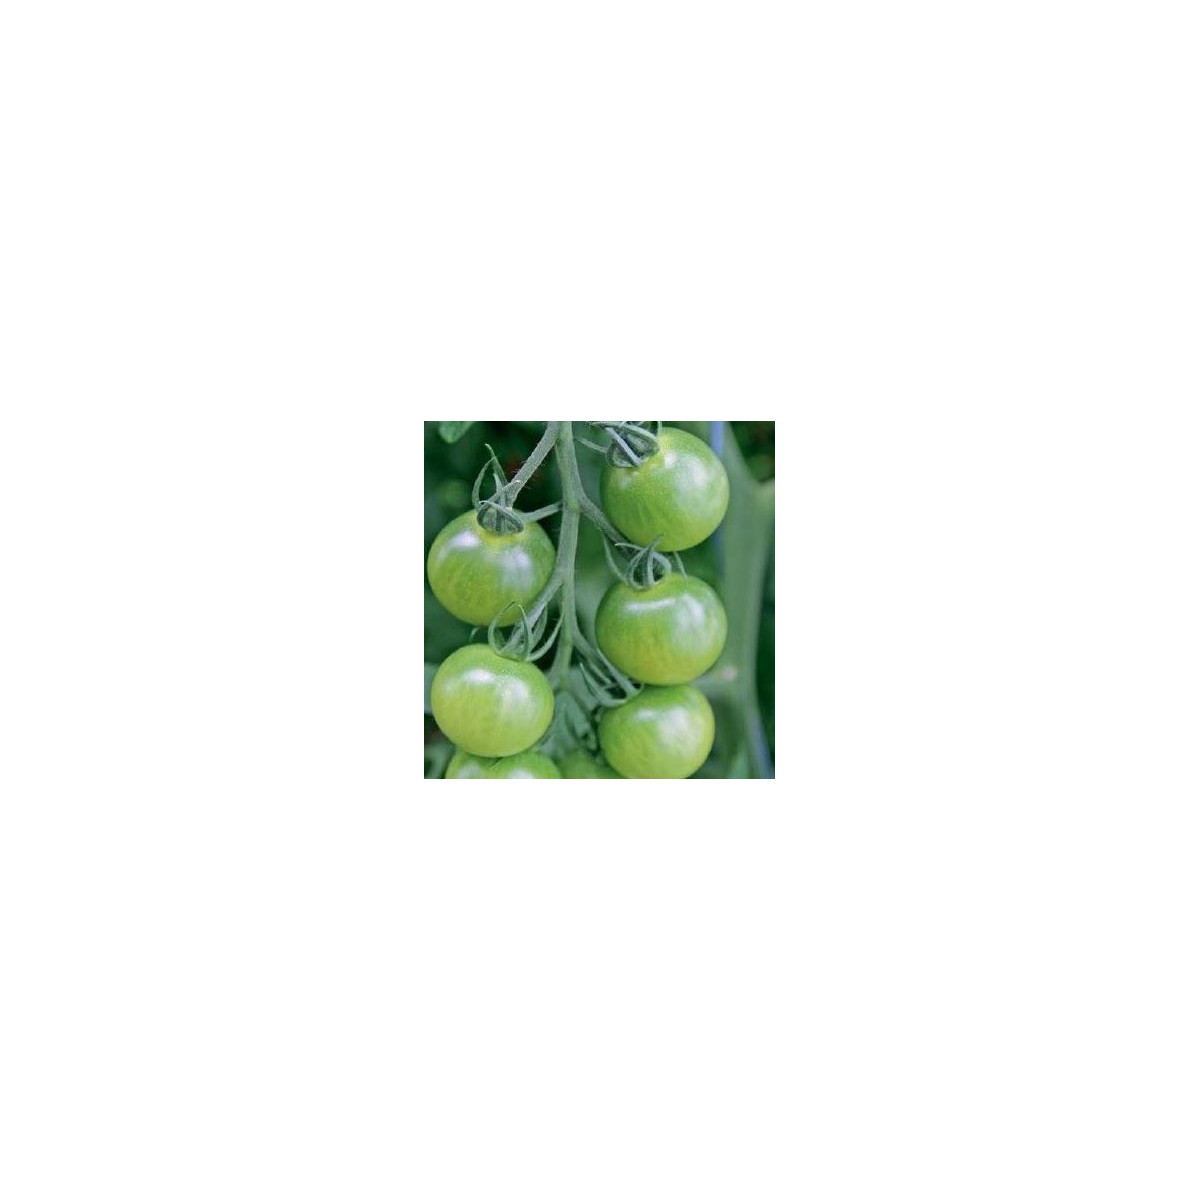 Rajče Limetto F1 - Lycopersicon esculentum - semena rajčete - 5 ks